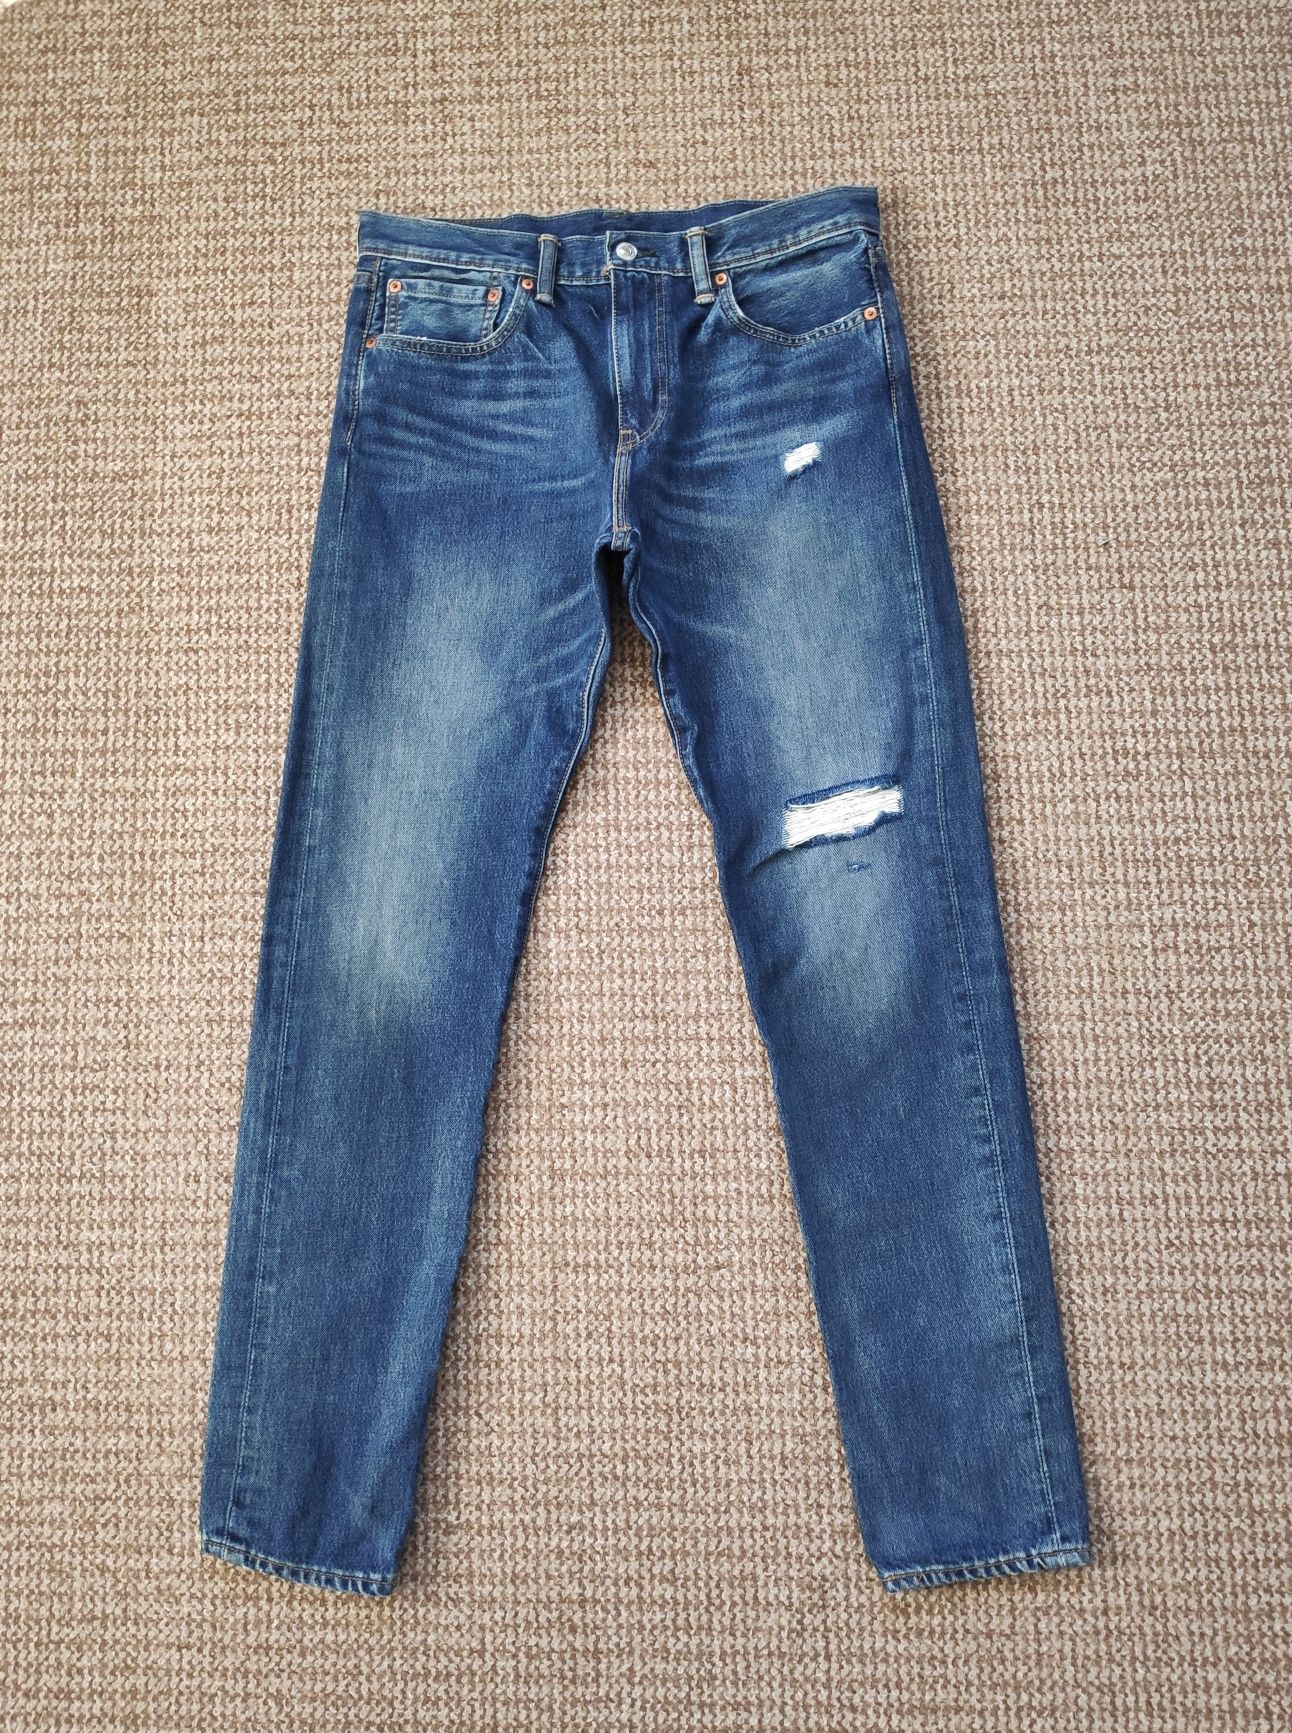 Levi's 512 рвані джинси slim tapered fit оригінал W32 L32